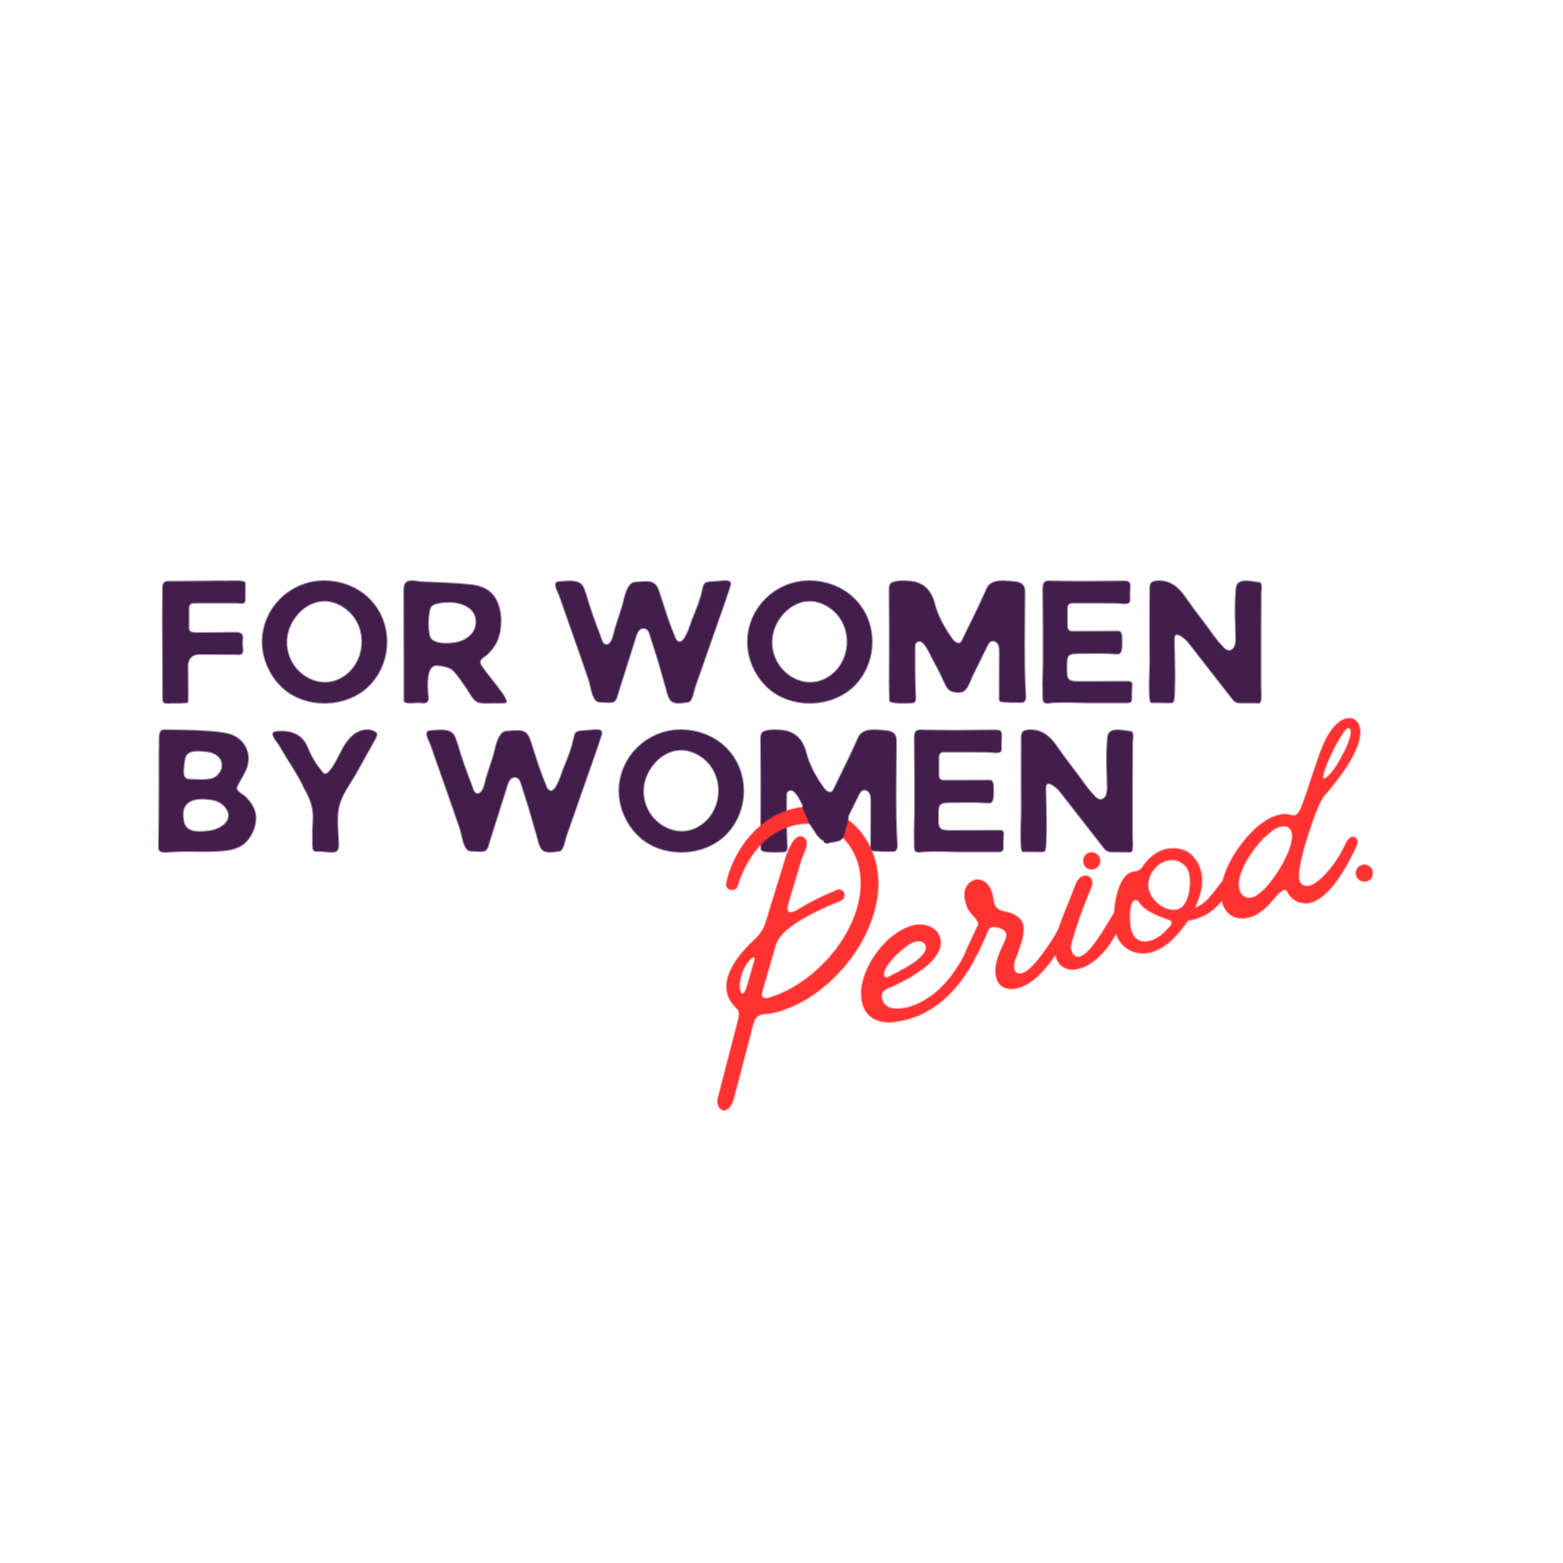 For Women By Women, Period. logo